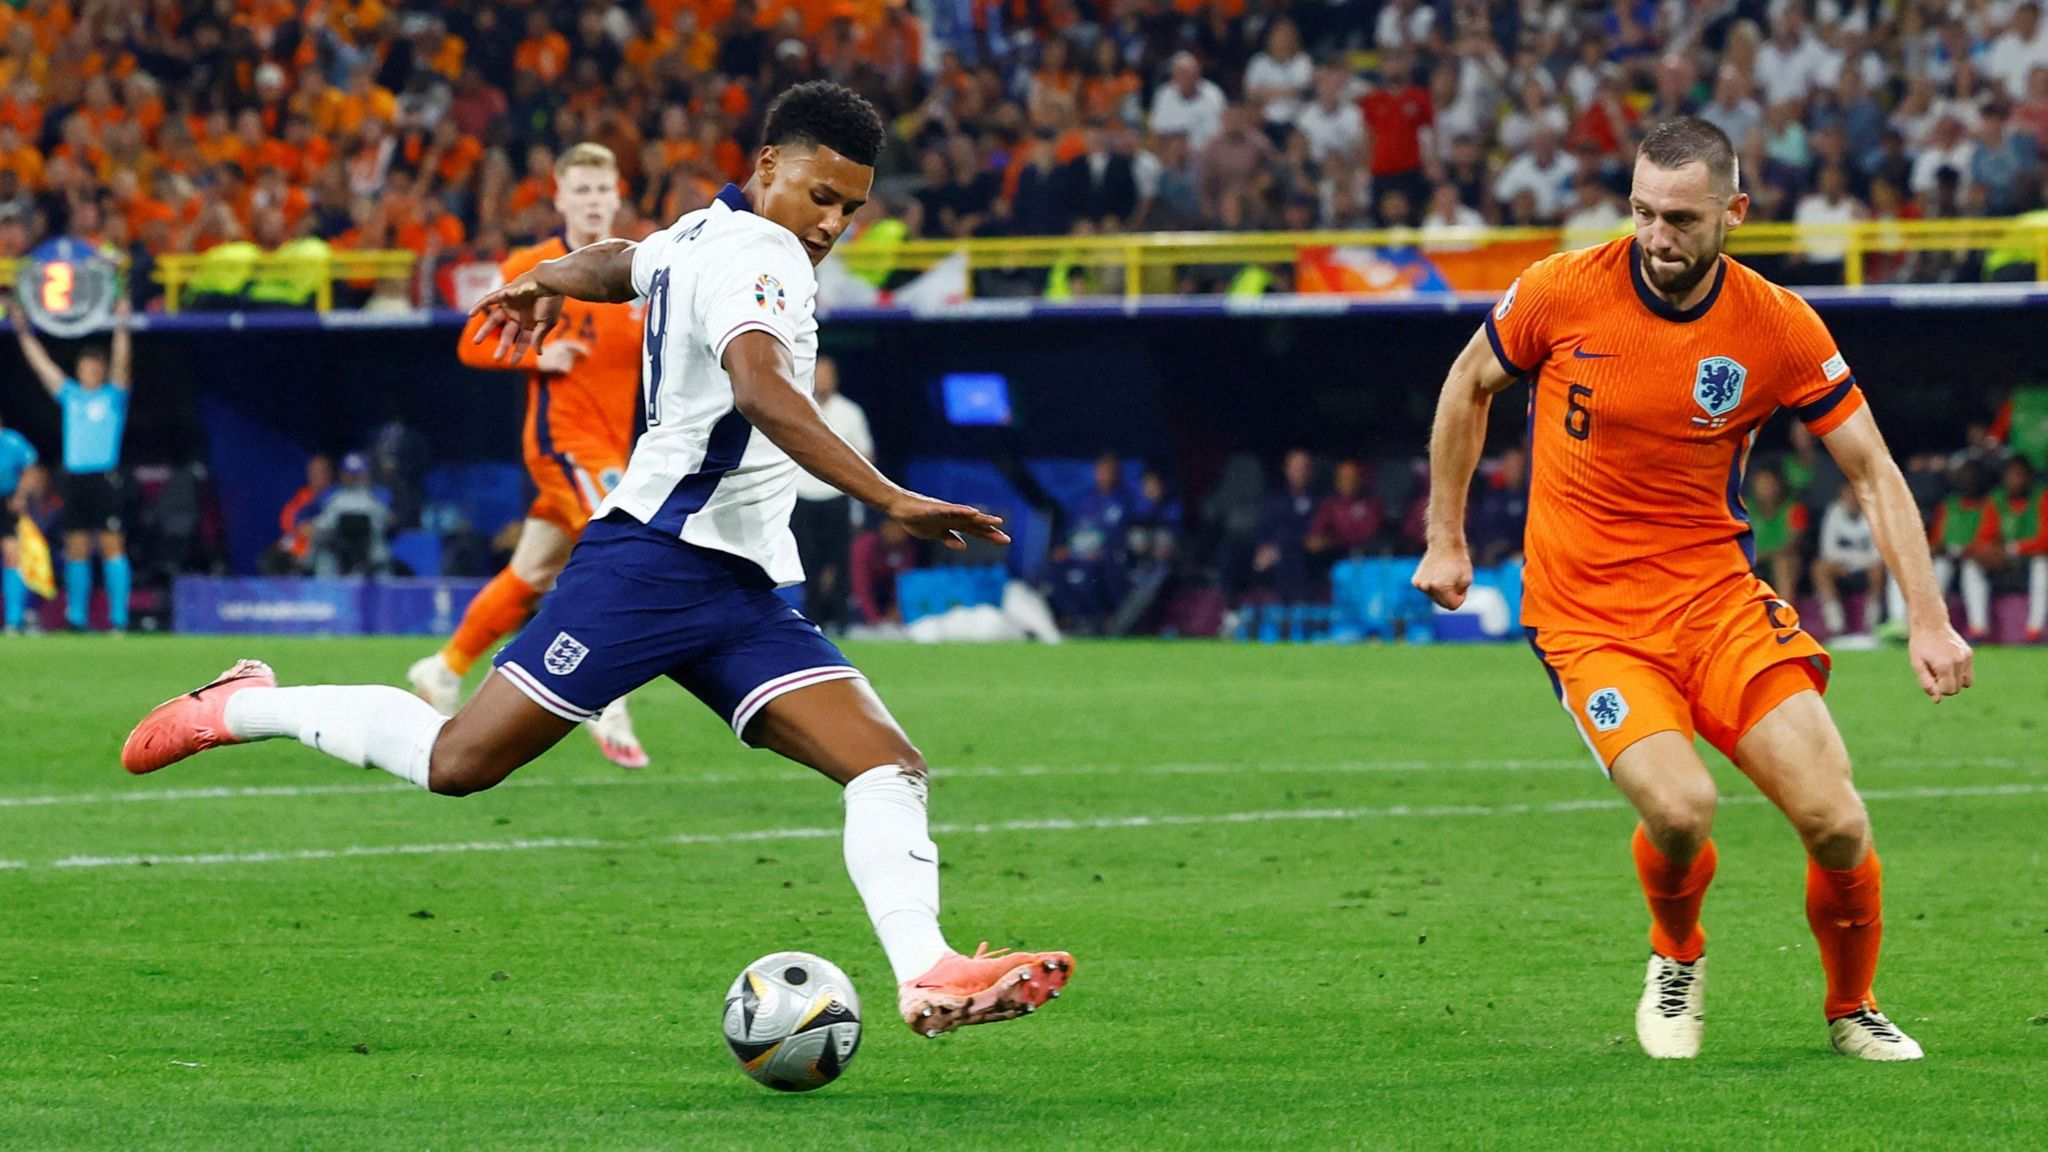 Watkins aims to kick football past a Netherlands player